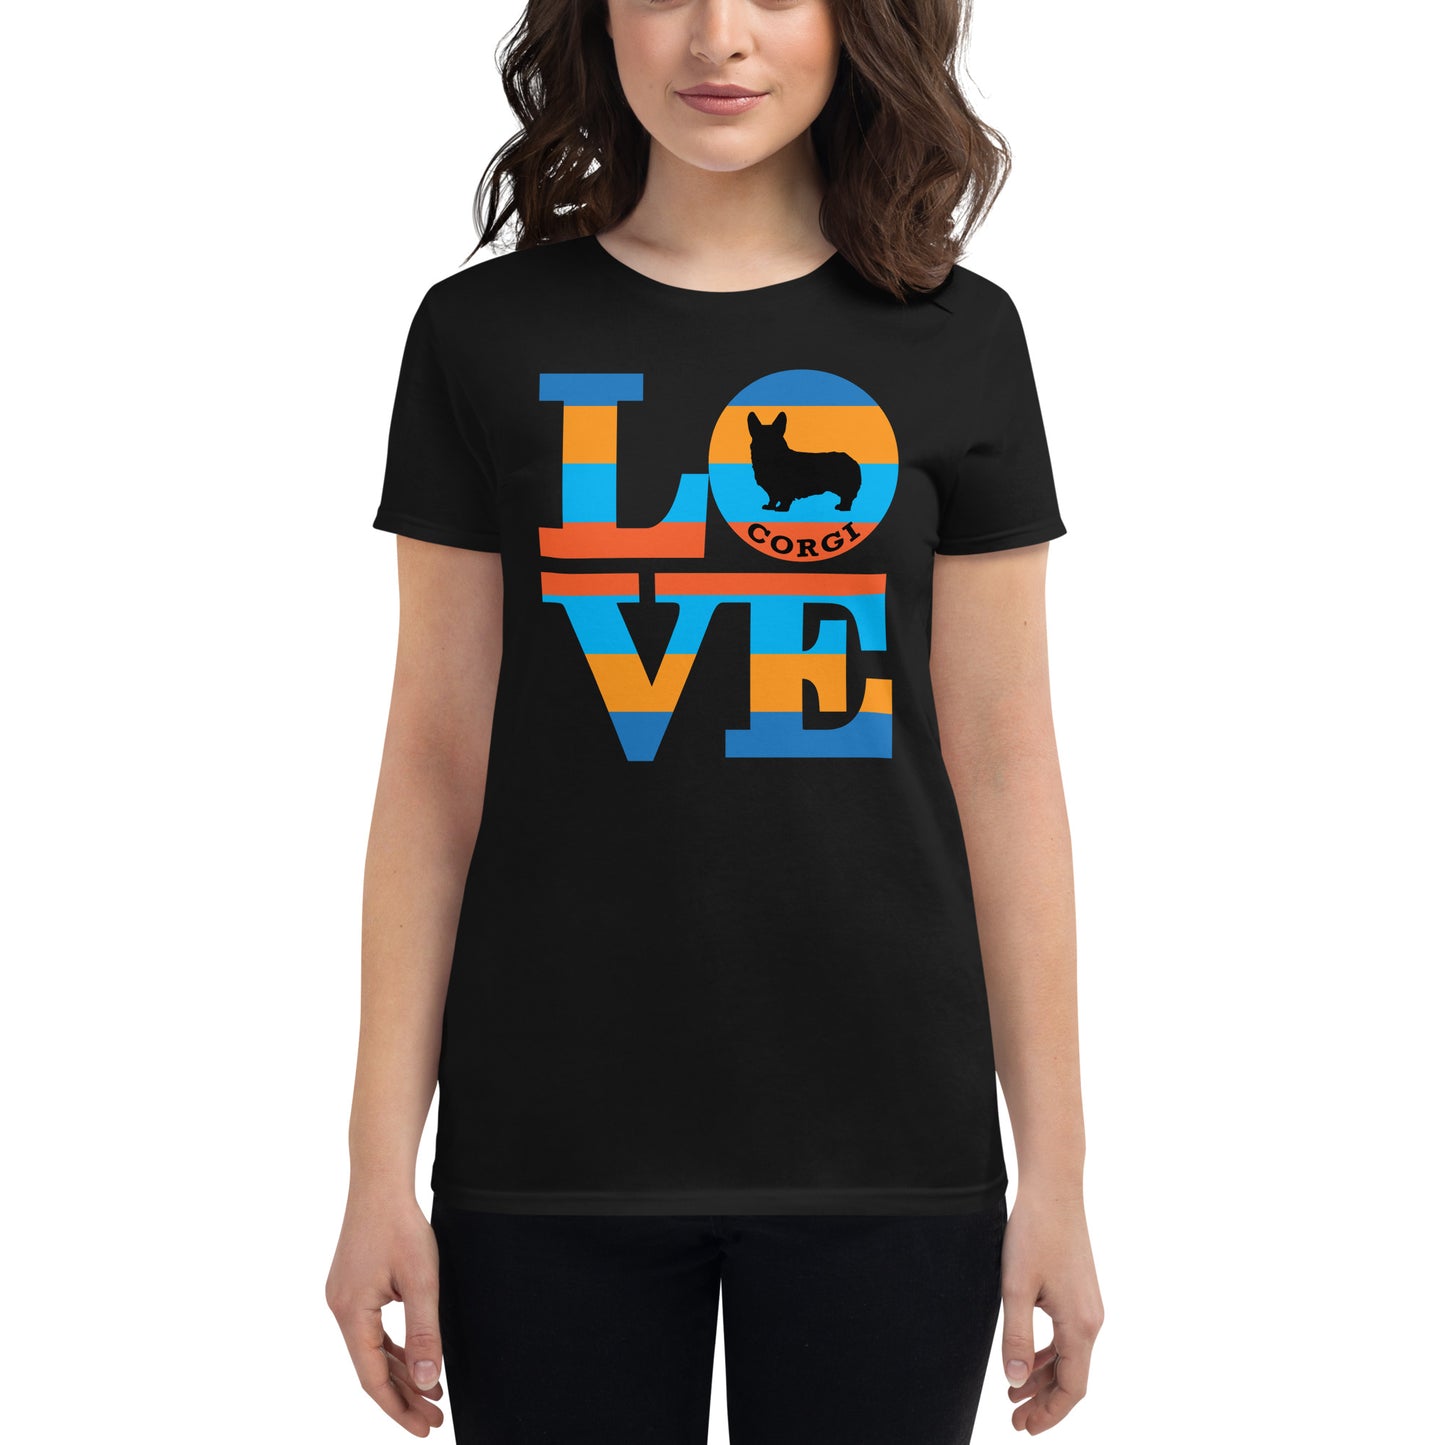 Love Corgi Women's short sleeve t-shirt